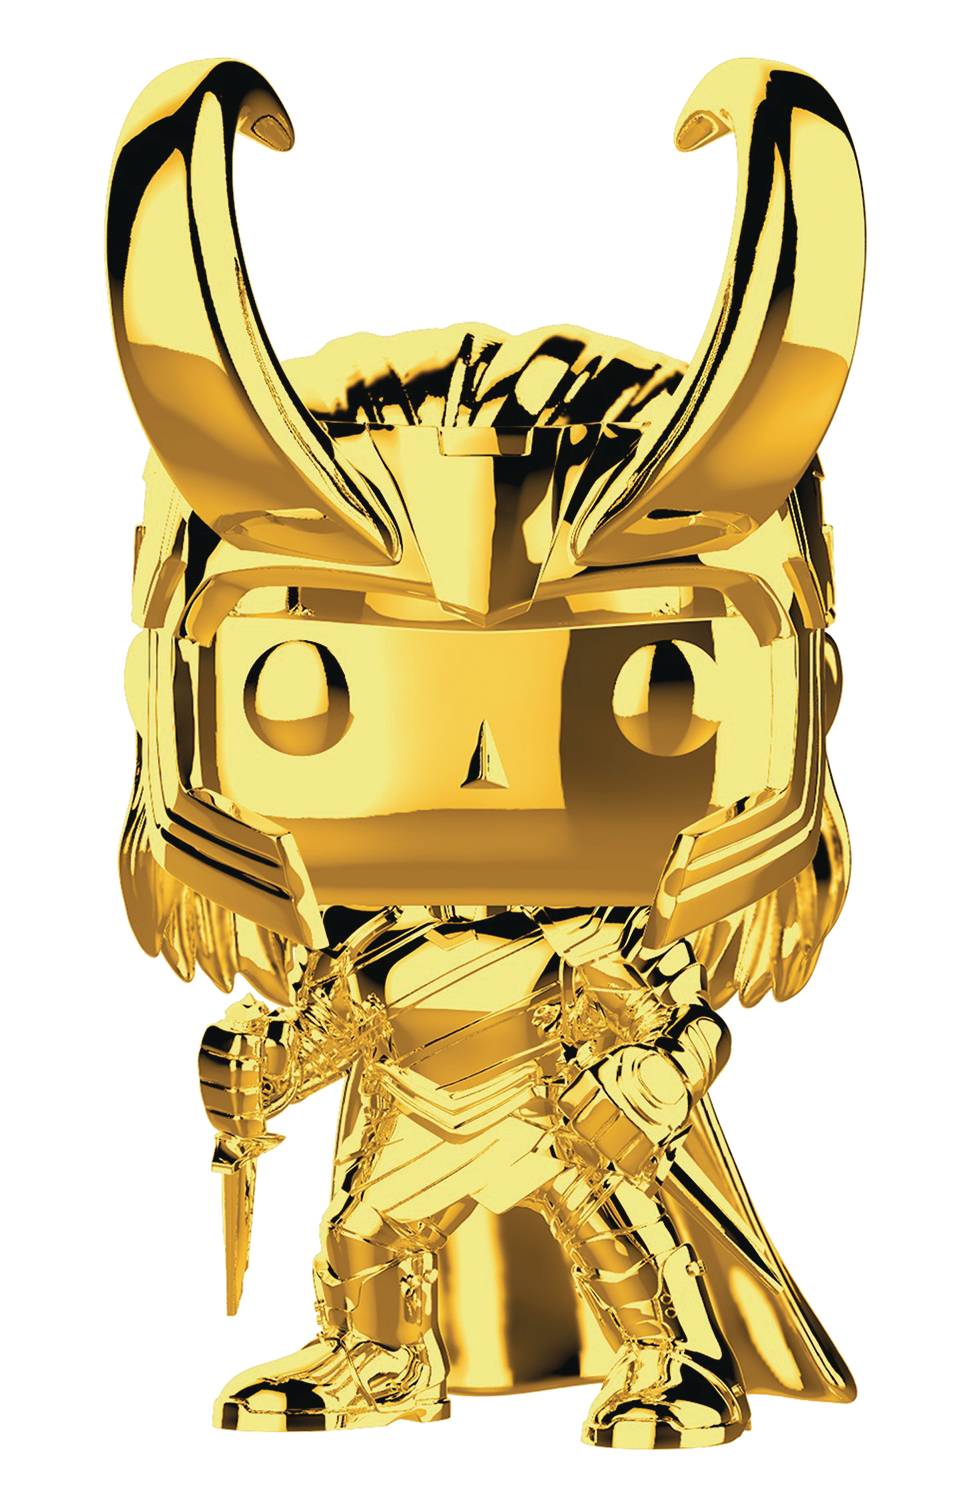 POP! Marvel 376 Marvel Studios The First 10 Years: Loki (Gold)